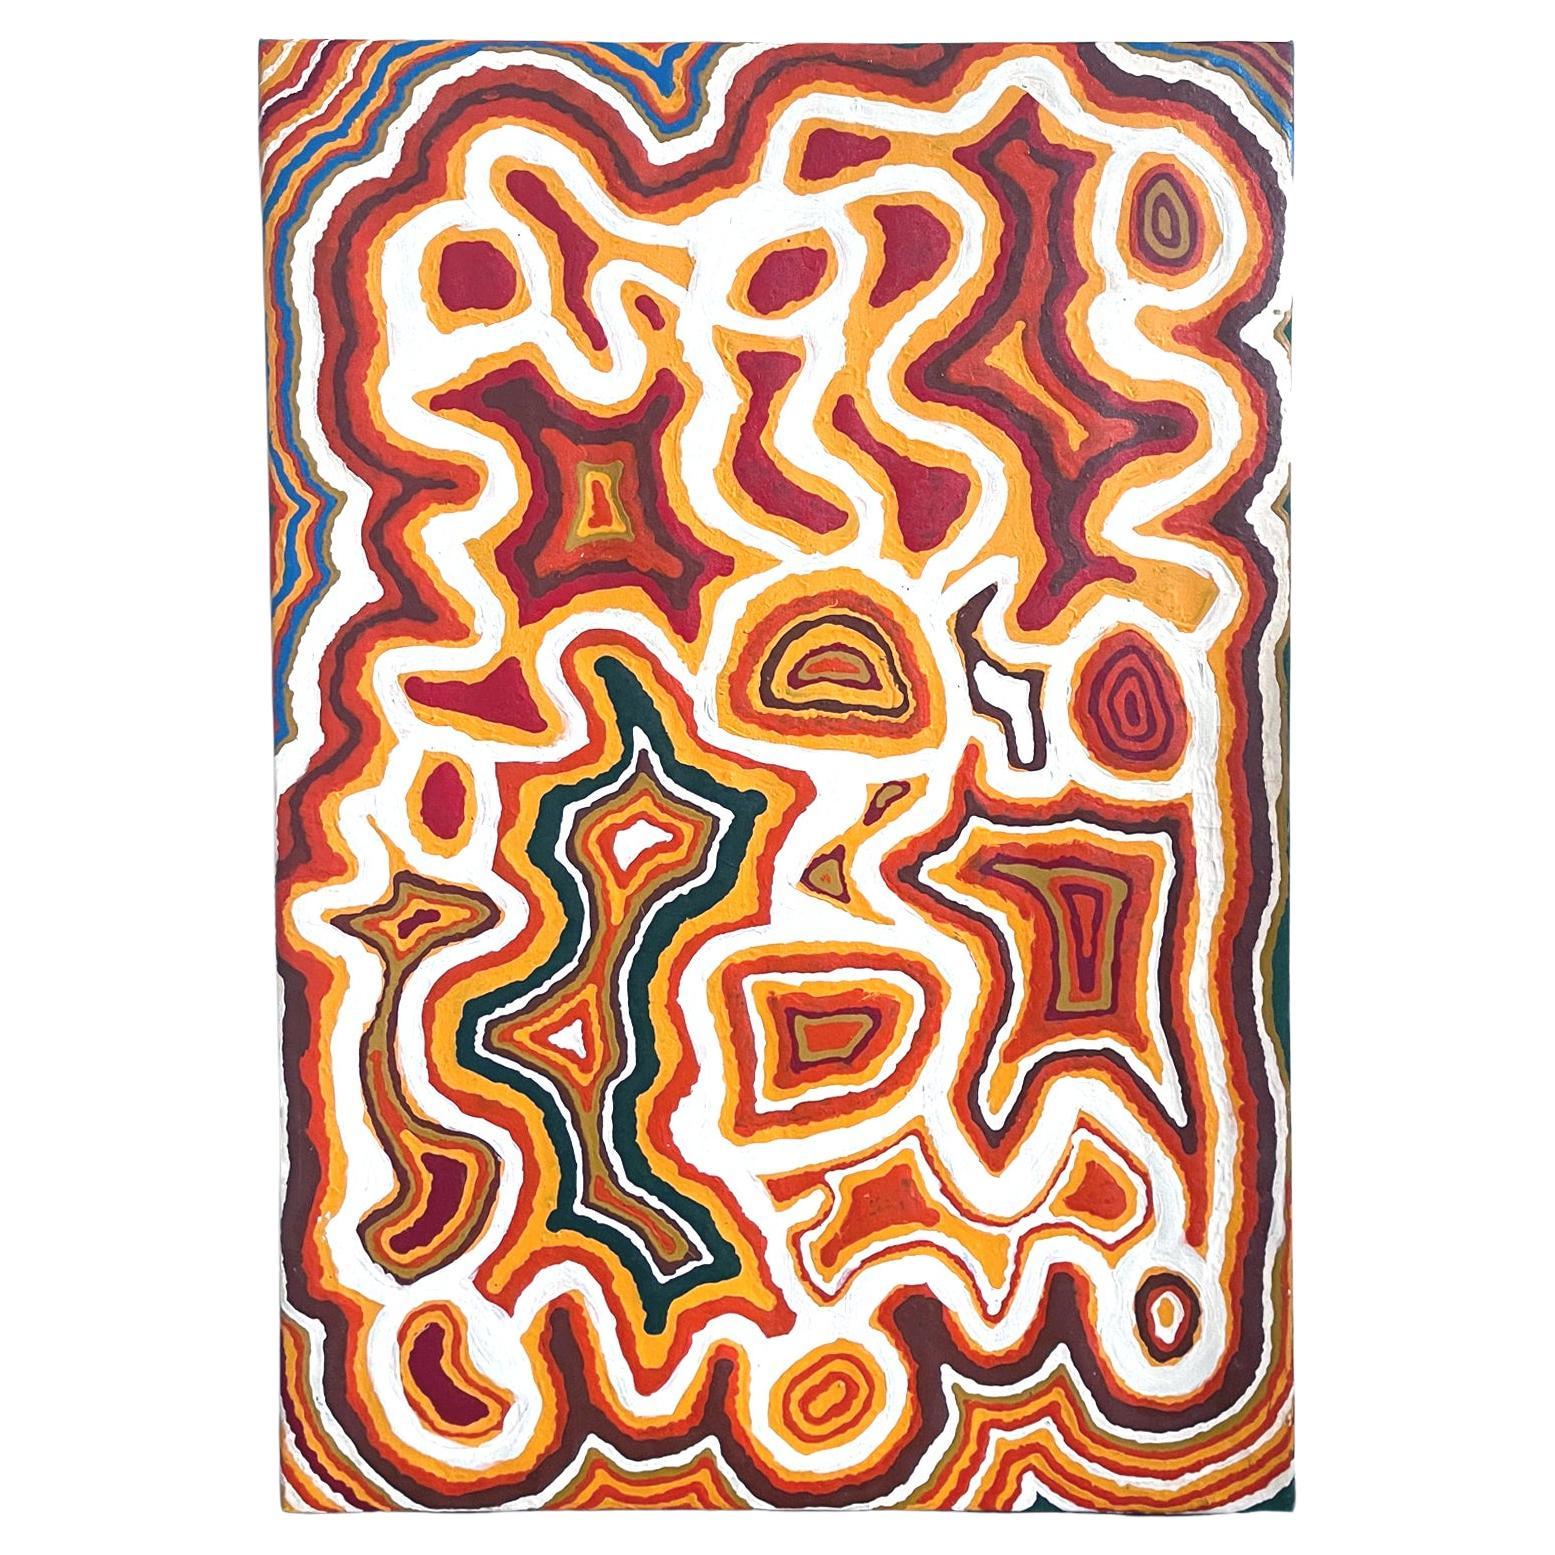 Australian Aboriginal Painting "Piari" by Ningie Nangala For Sale